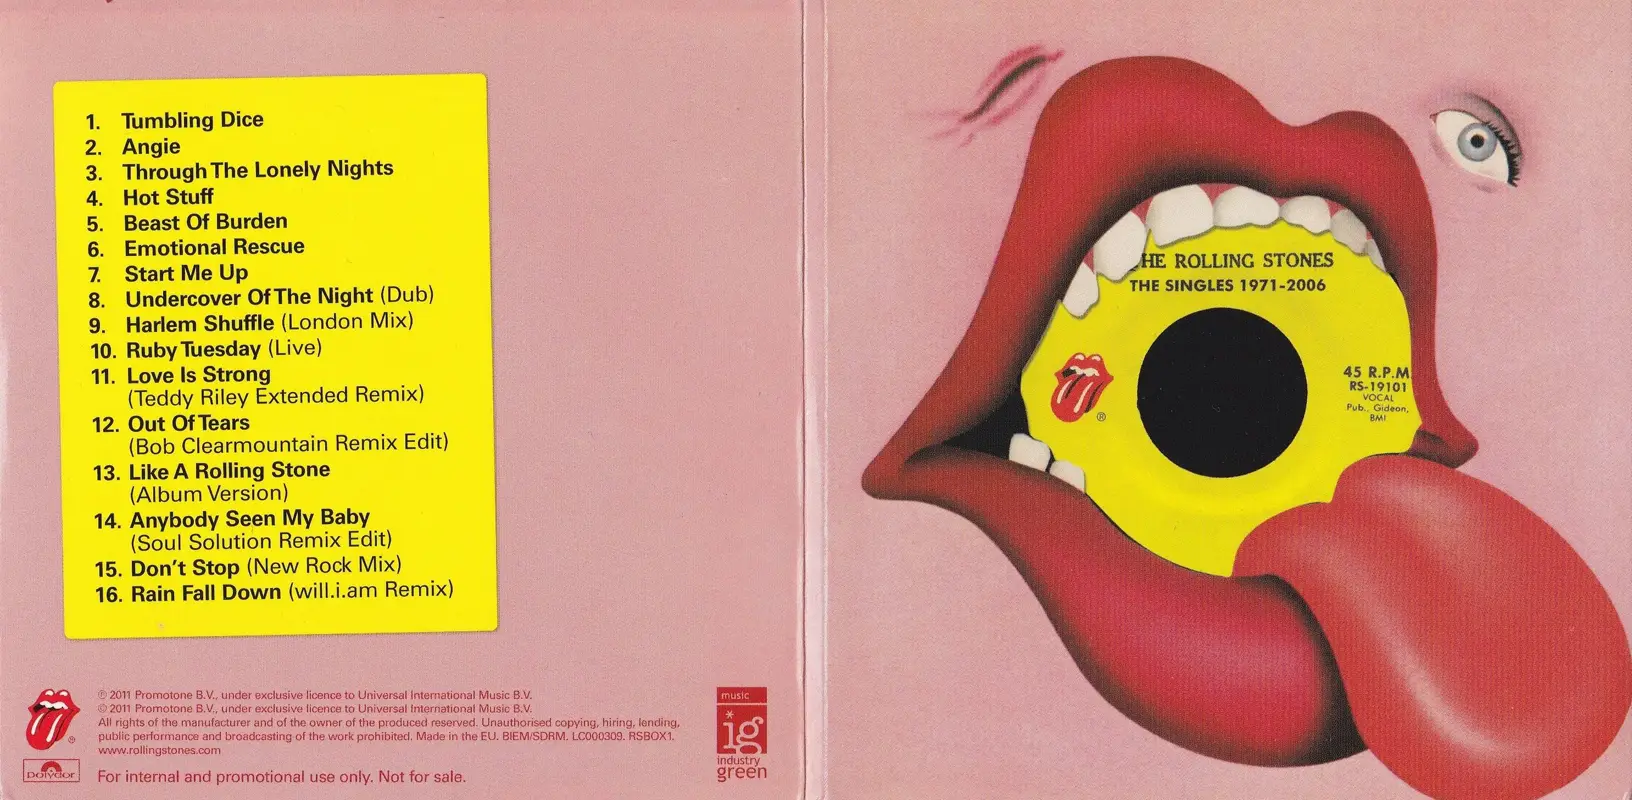 Seen my baby перевод. Rolling Stones 1971. Rolling Stones игра с огнём. Rolling Stones the Singles 1971-2006 обложка альбома. The Rolling Stones 1971 Live.